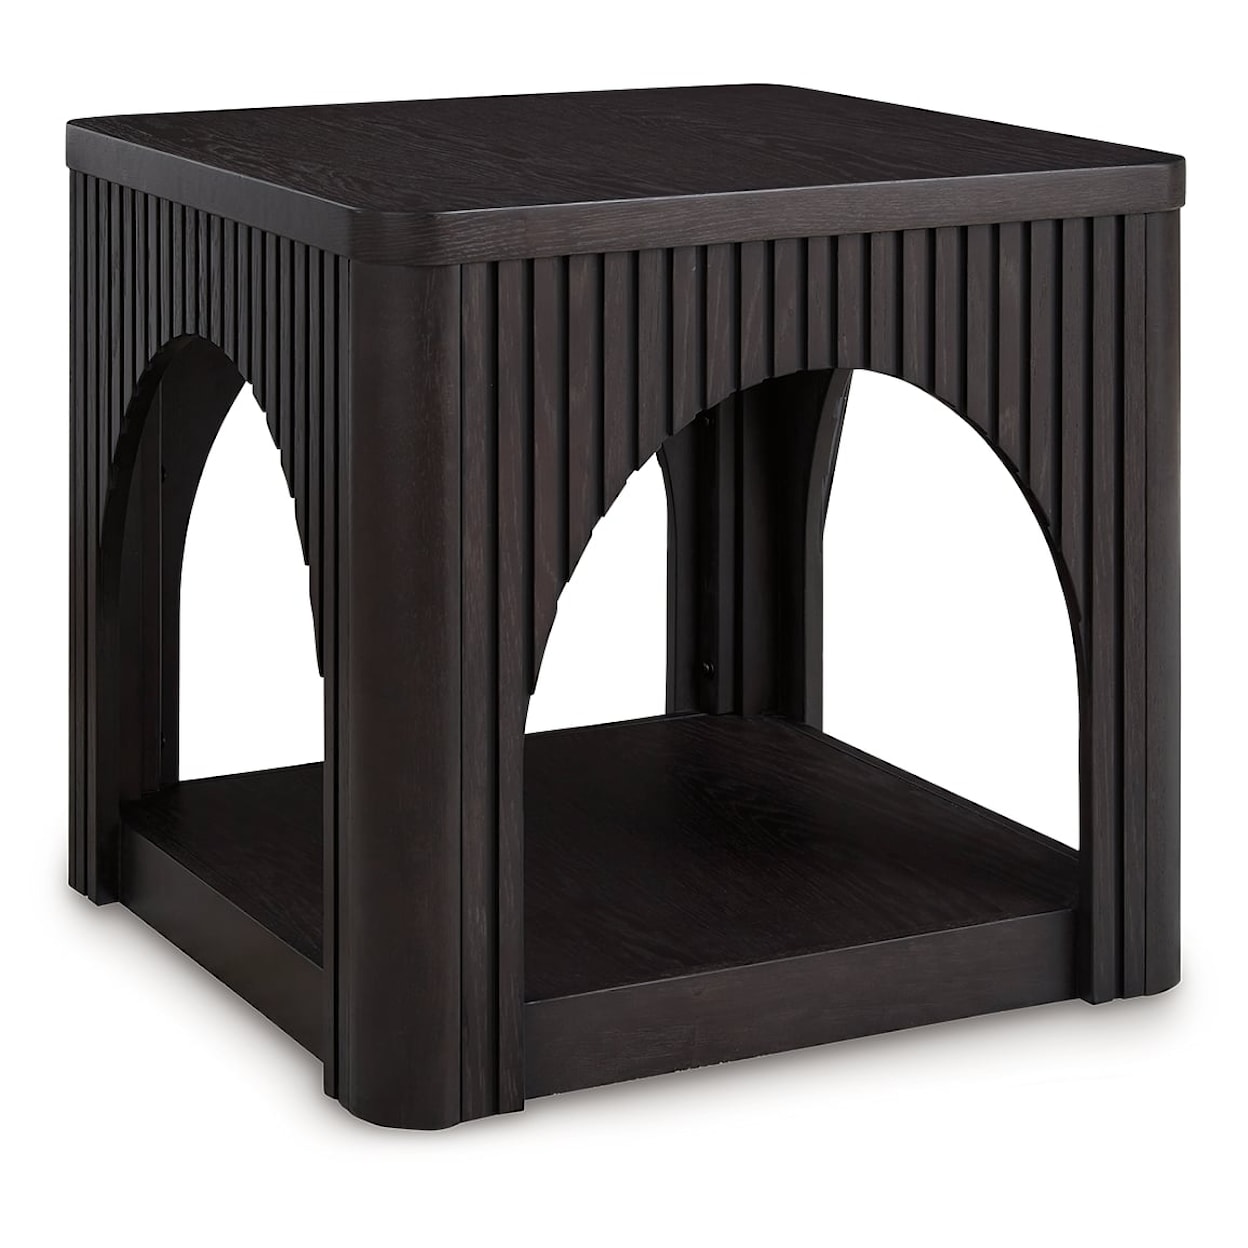 Ashley Furniture Signature Design Yellink Square End Table